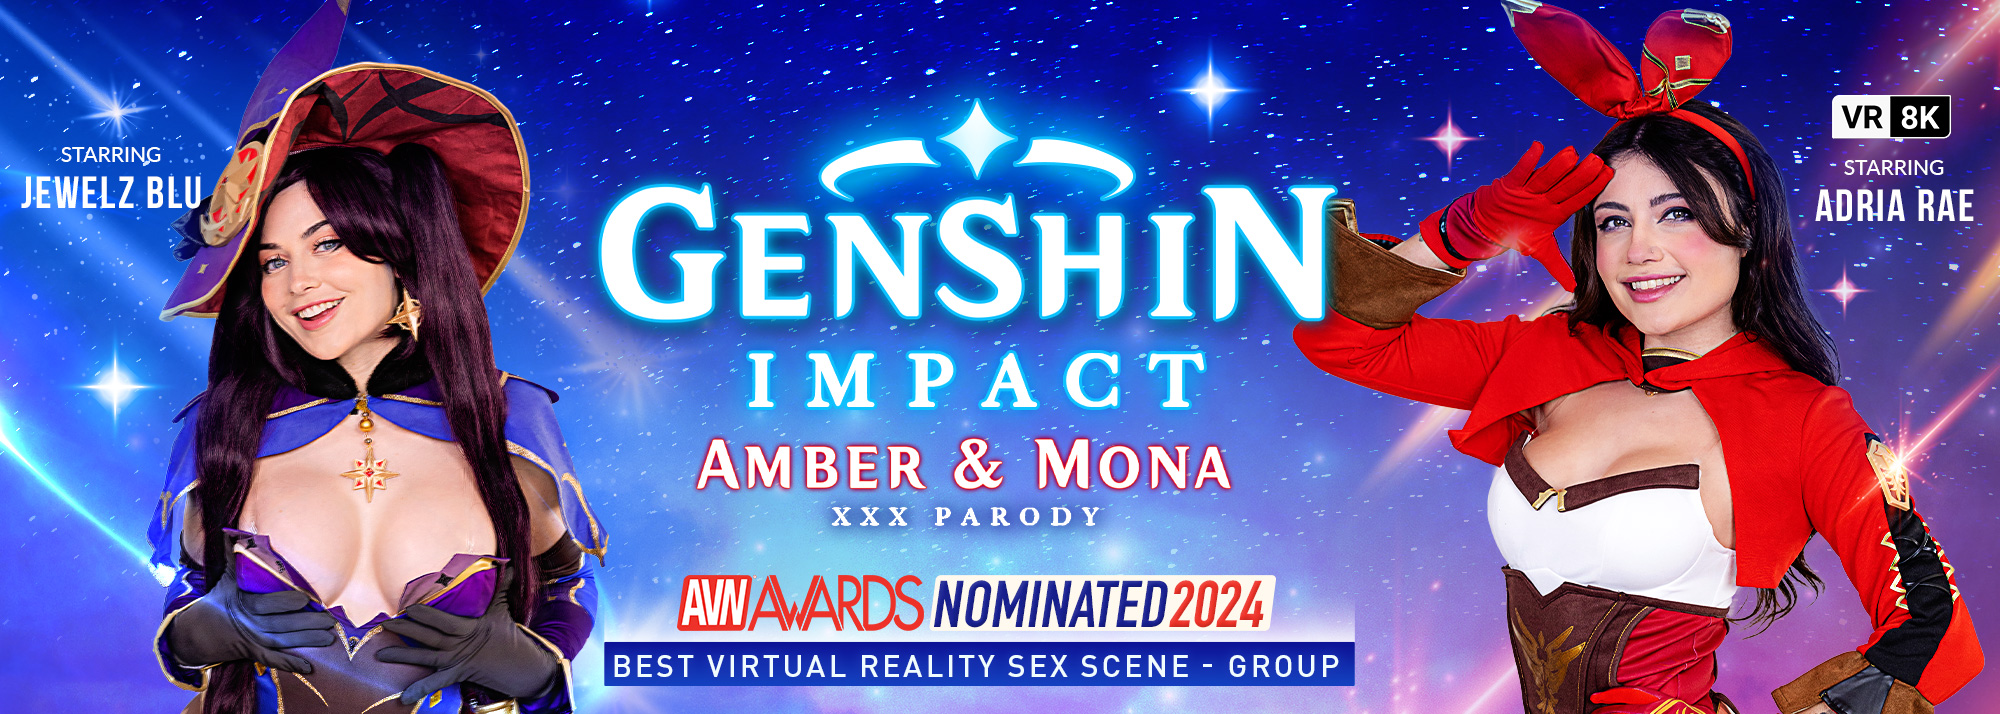 Genshin Impact Porn Parody: Amber & Mona - VR Video, Starring: Jewelz Blu, Adria Rae